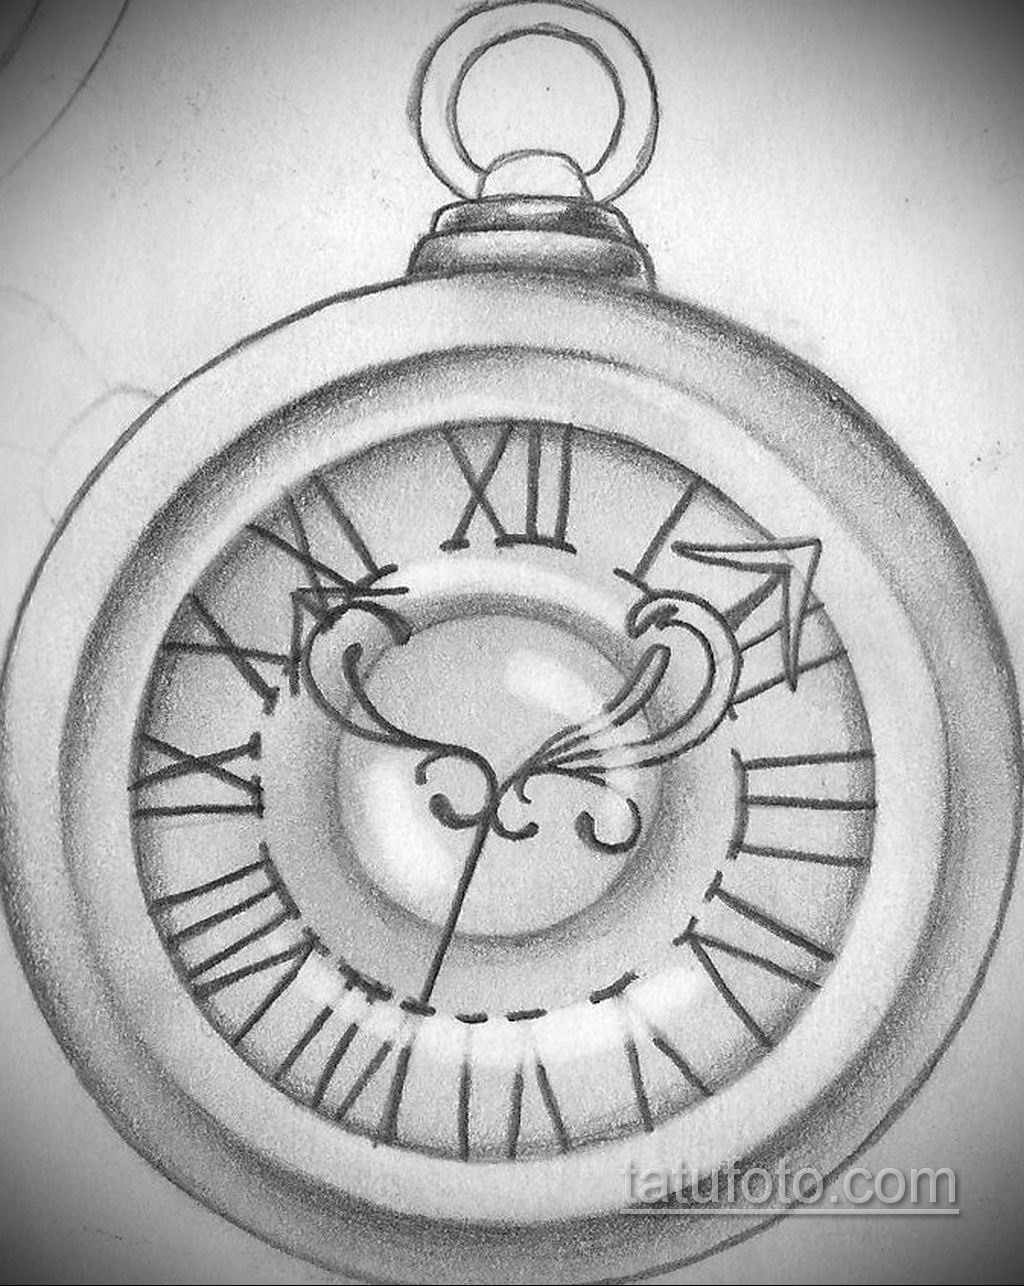 Рисунок карманных часов. Часы тату эскиз. Карманные часы тату. Часы на цепочке эскиз. Карманные часы эскиз.